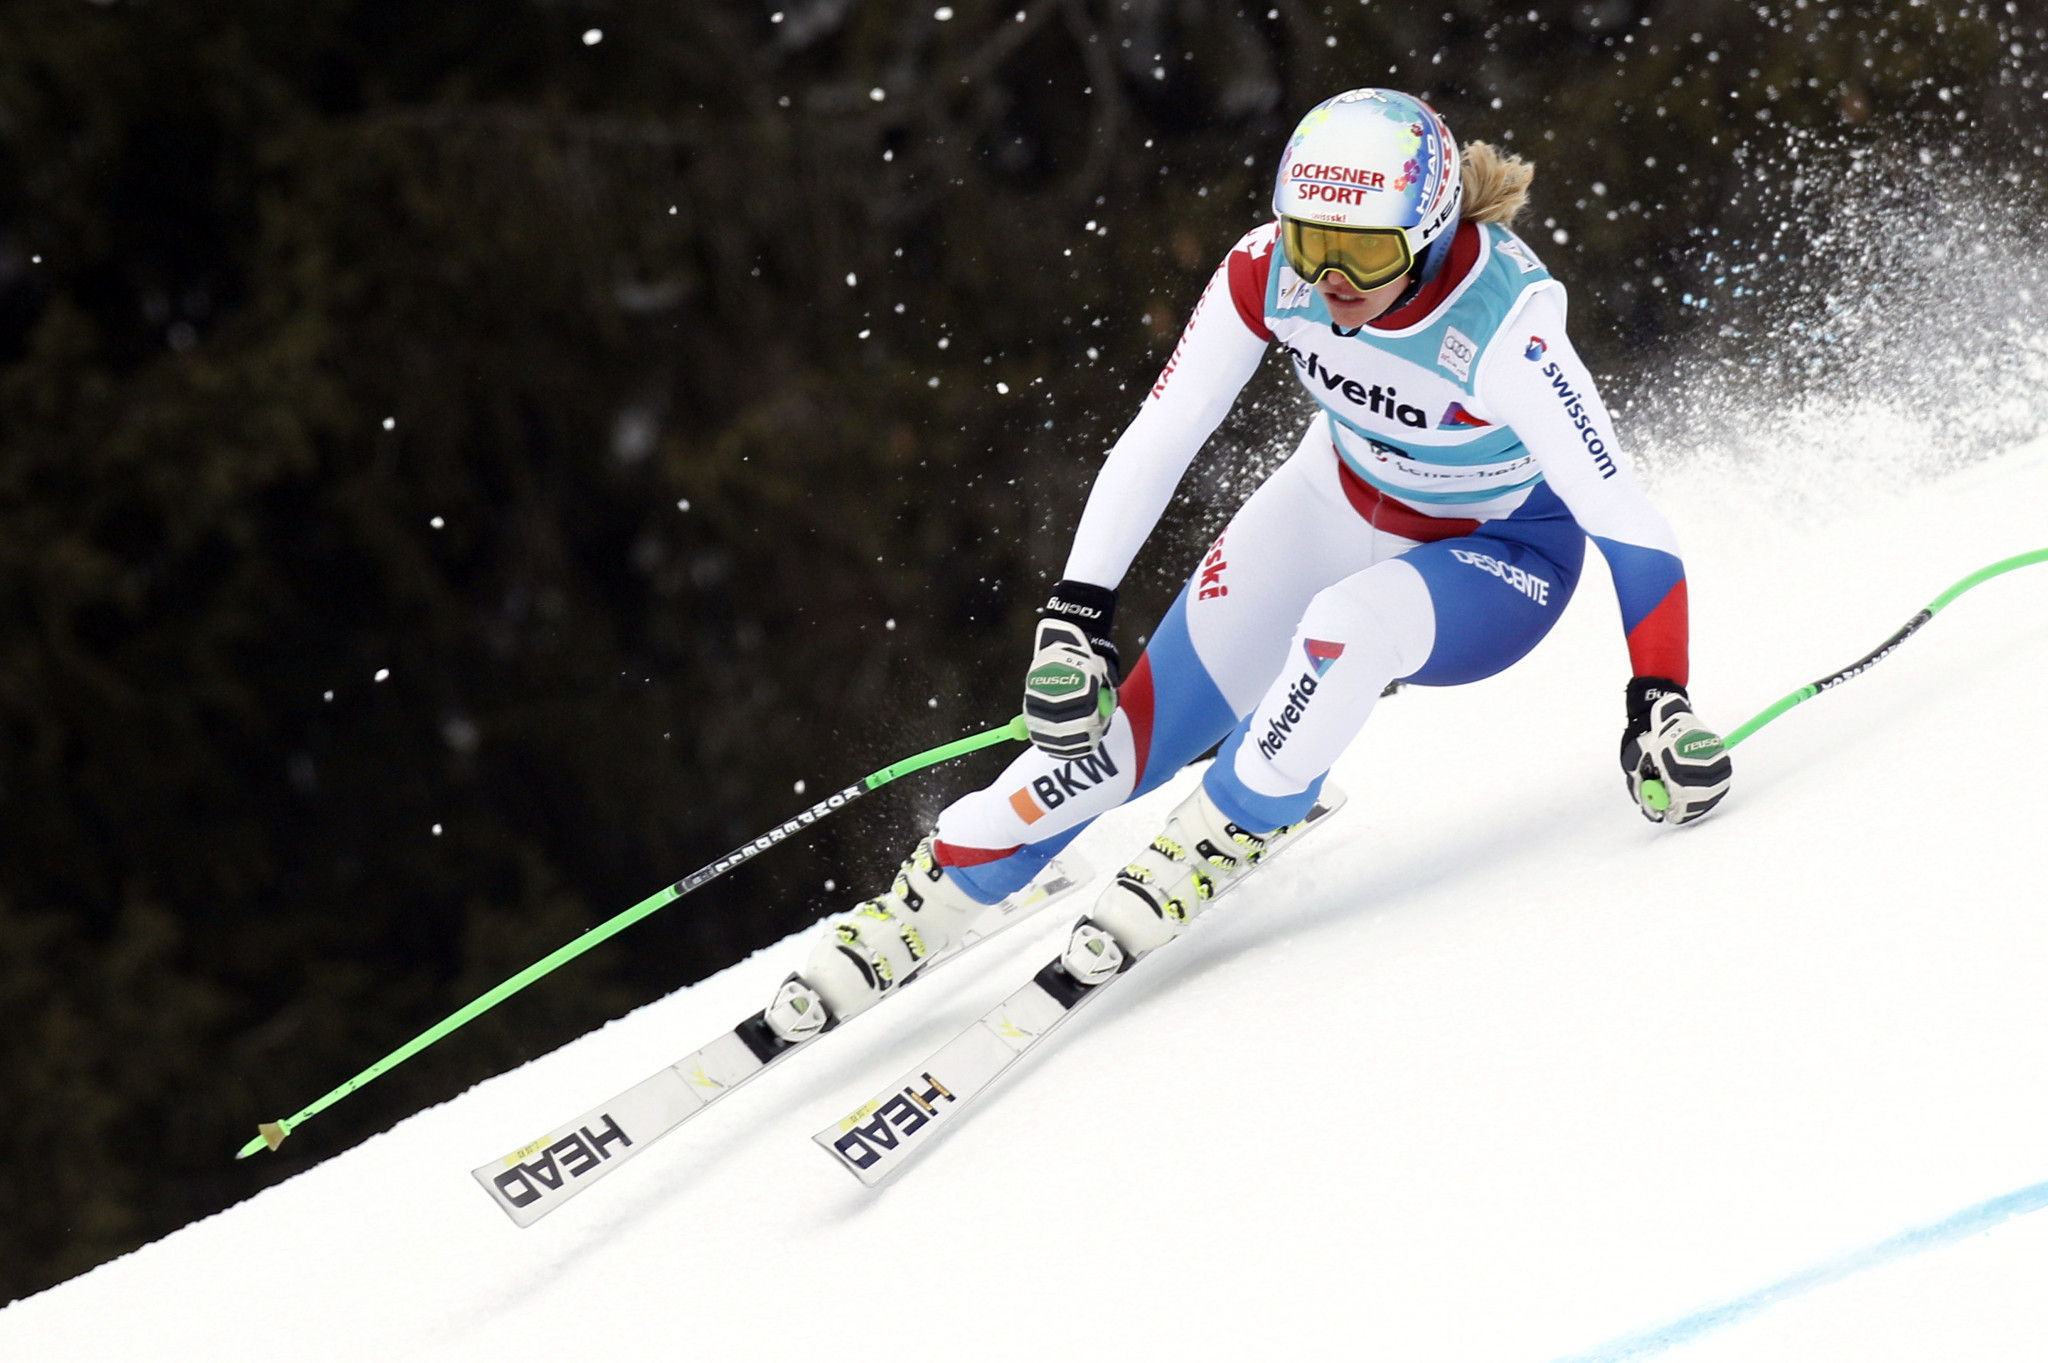 Lenzerheide to host Alpine Skiing World Cup finals in 2021